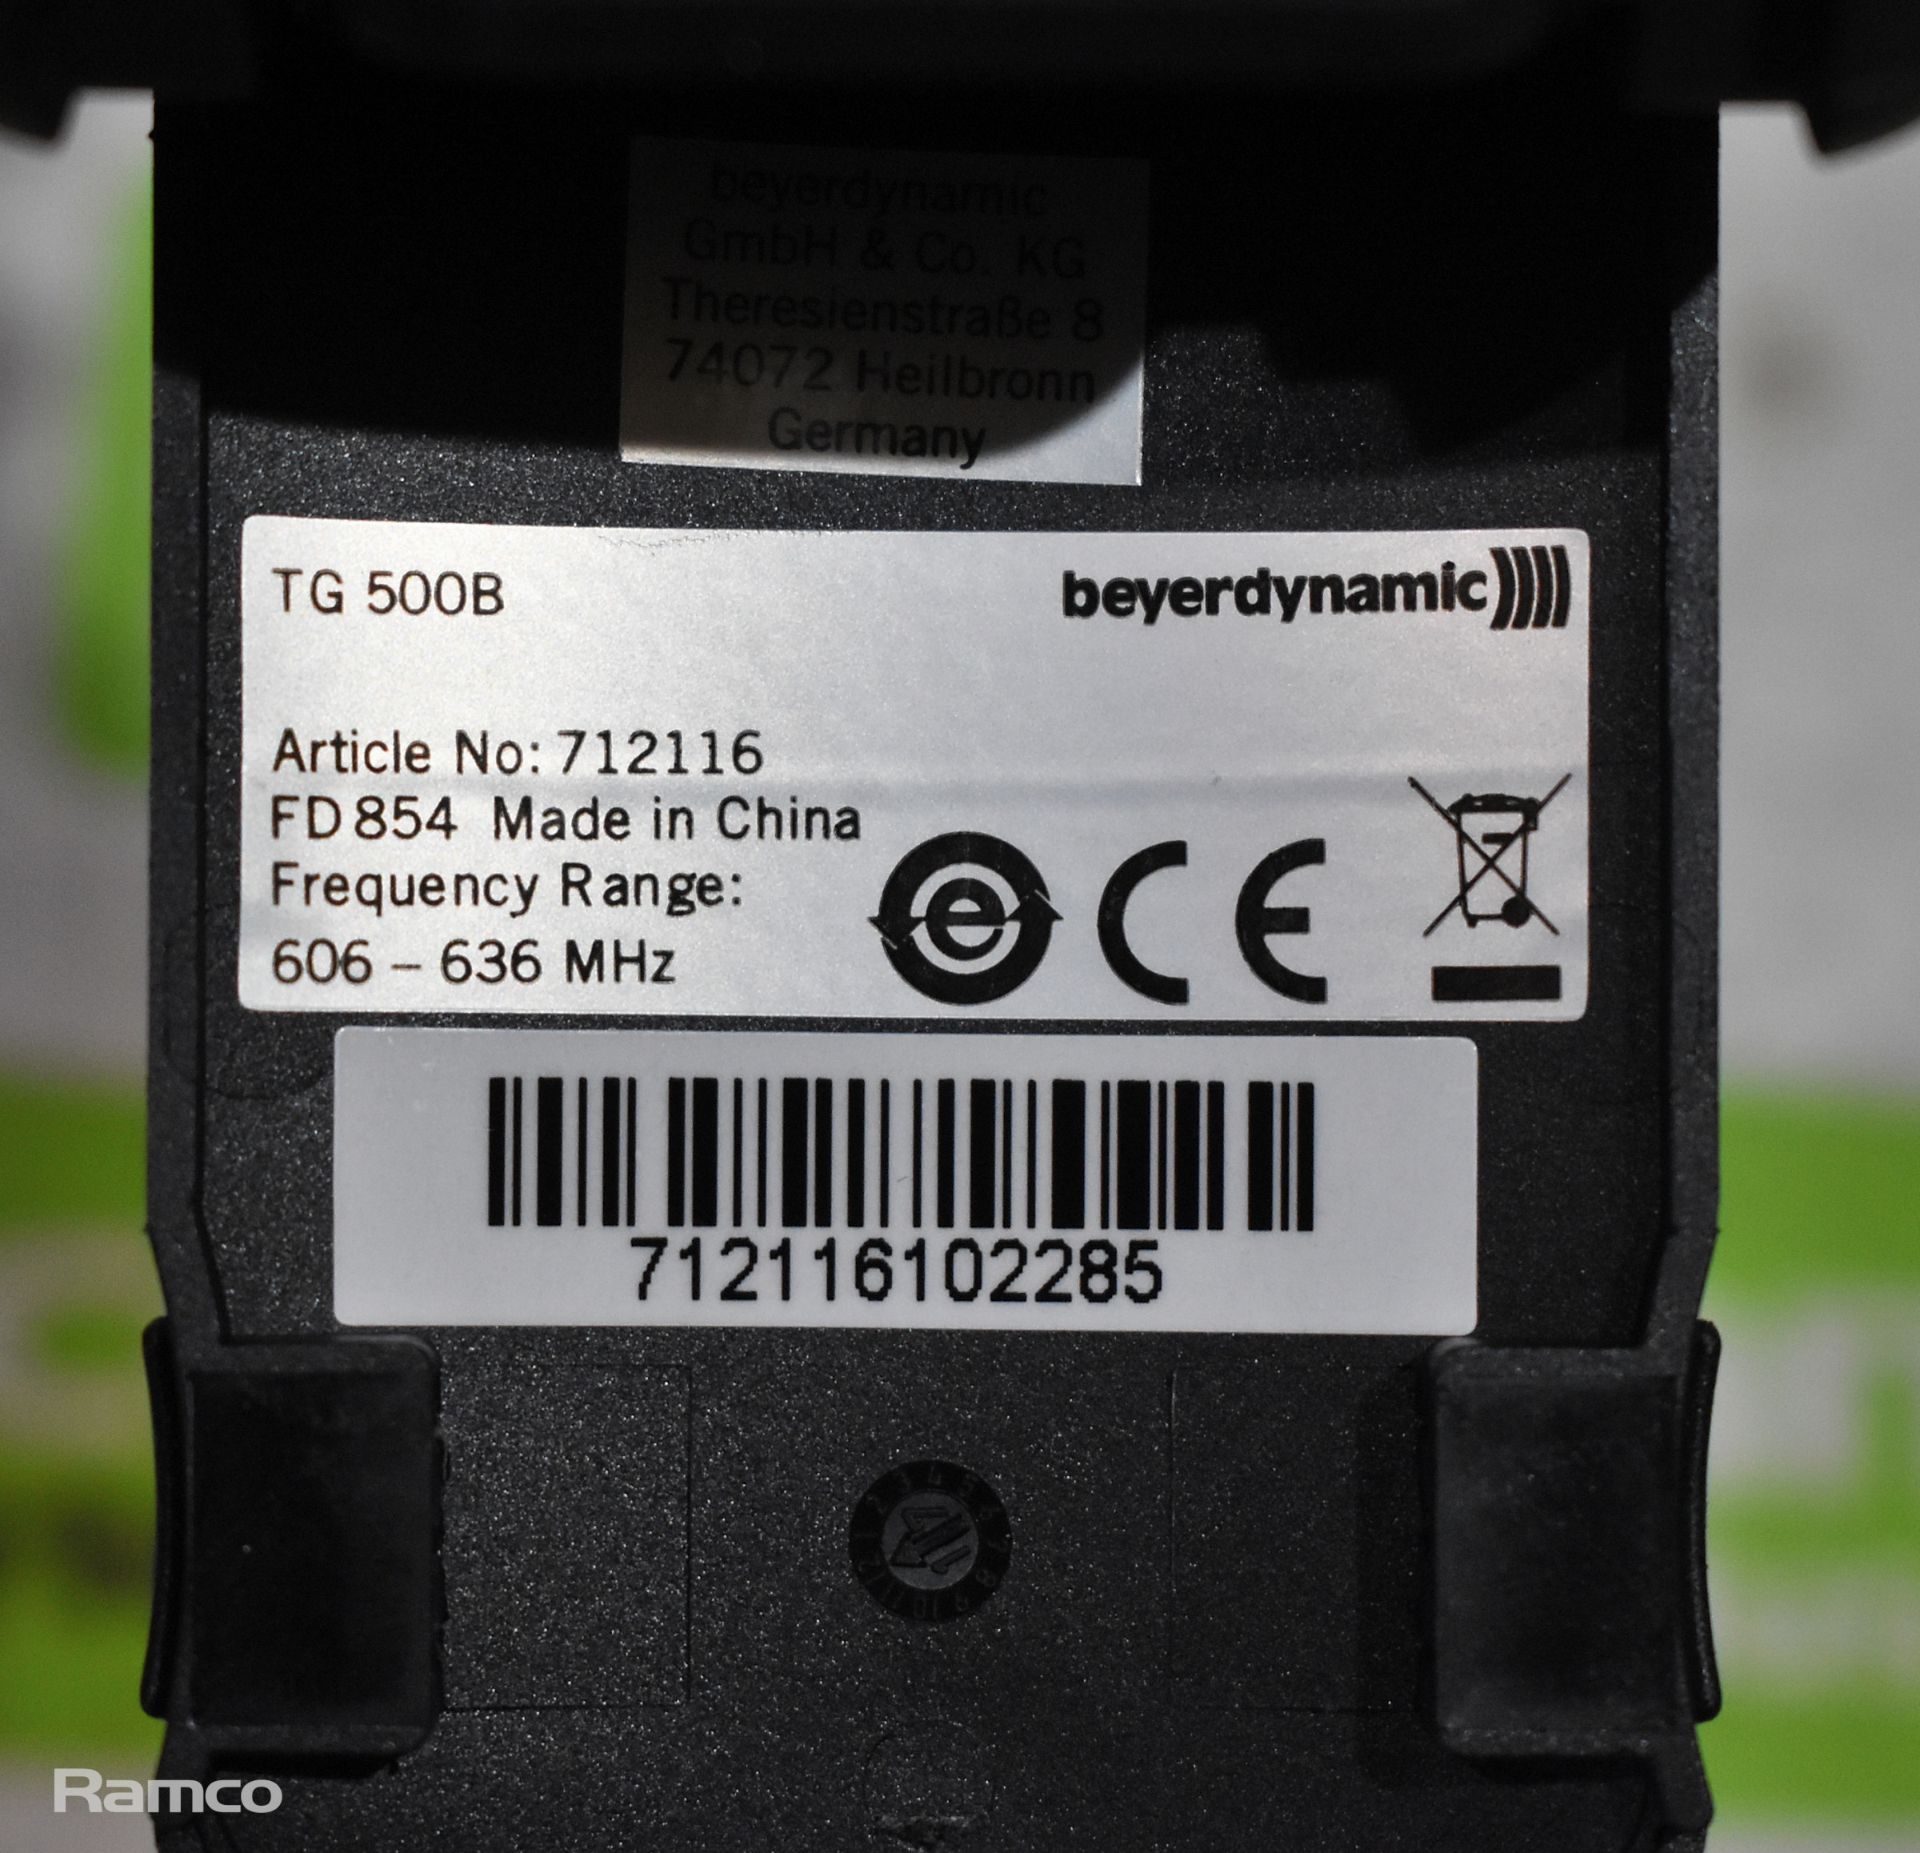 2x Beyerdynamic TG 500B beltpack transmitters, Biamp Devio SCR-20C Black 3m conferencing hub - Image 7 of 12